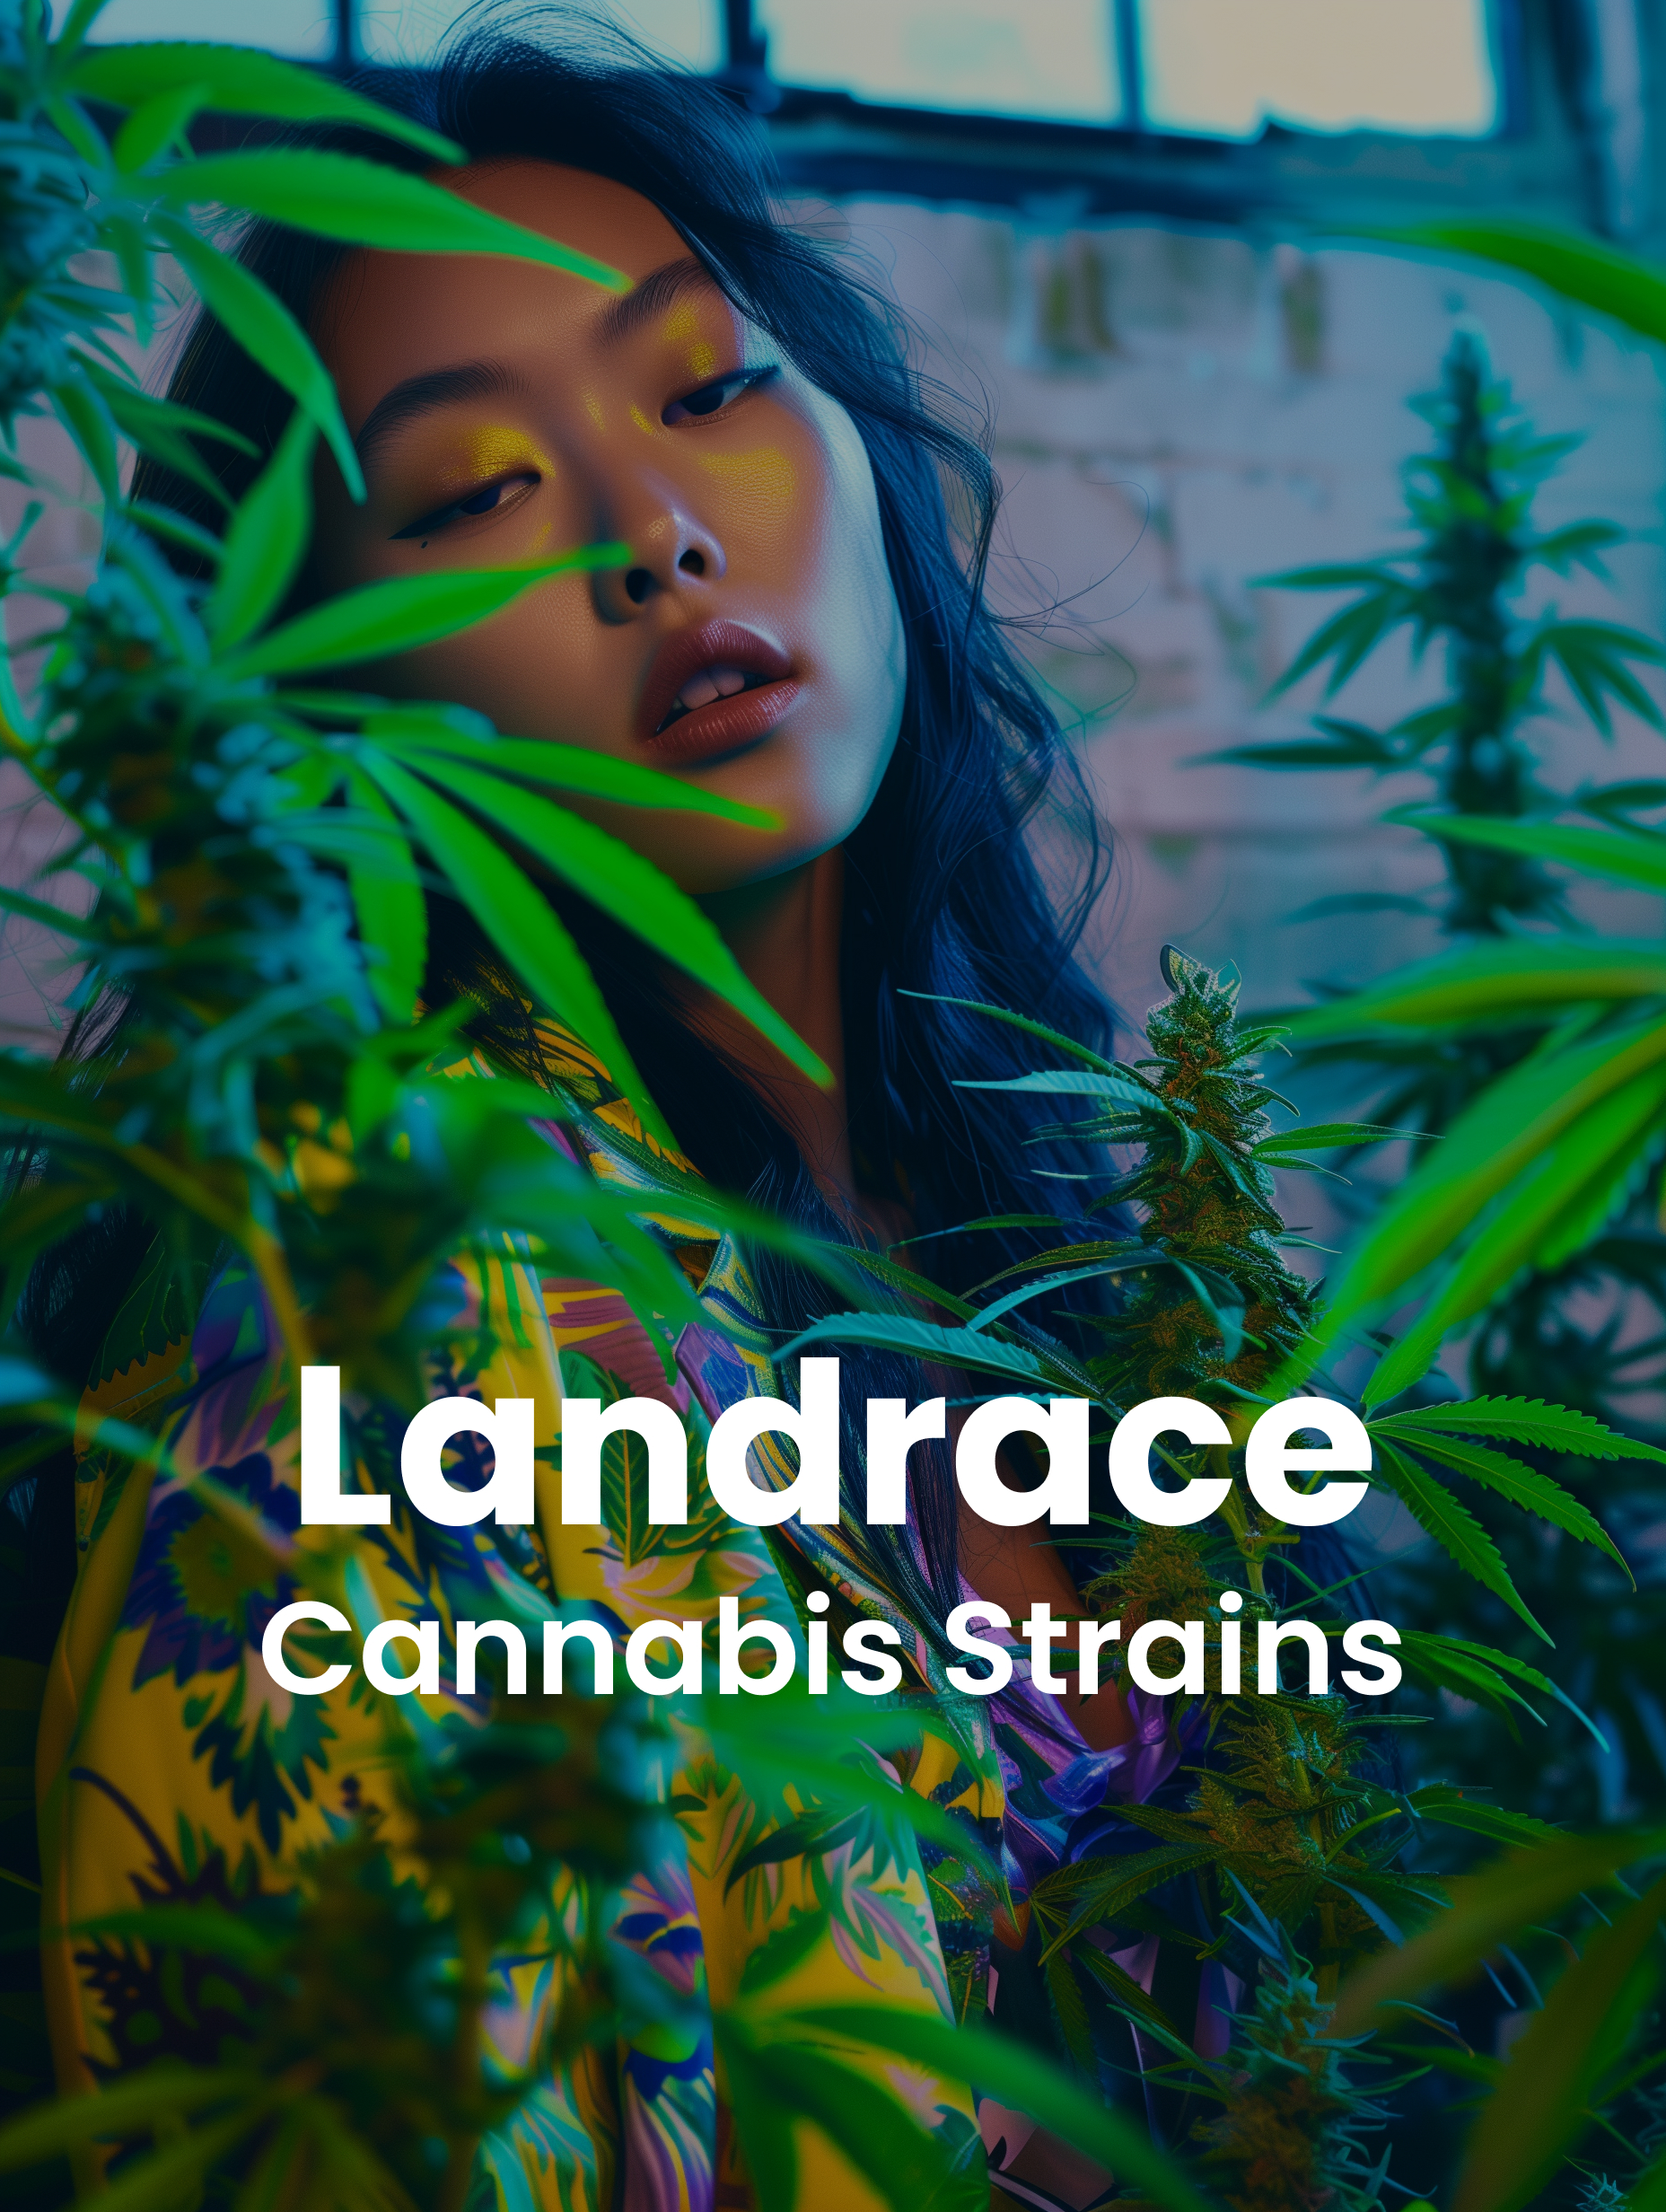 Landrace Cannabis Strains